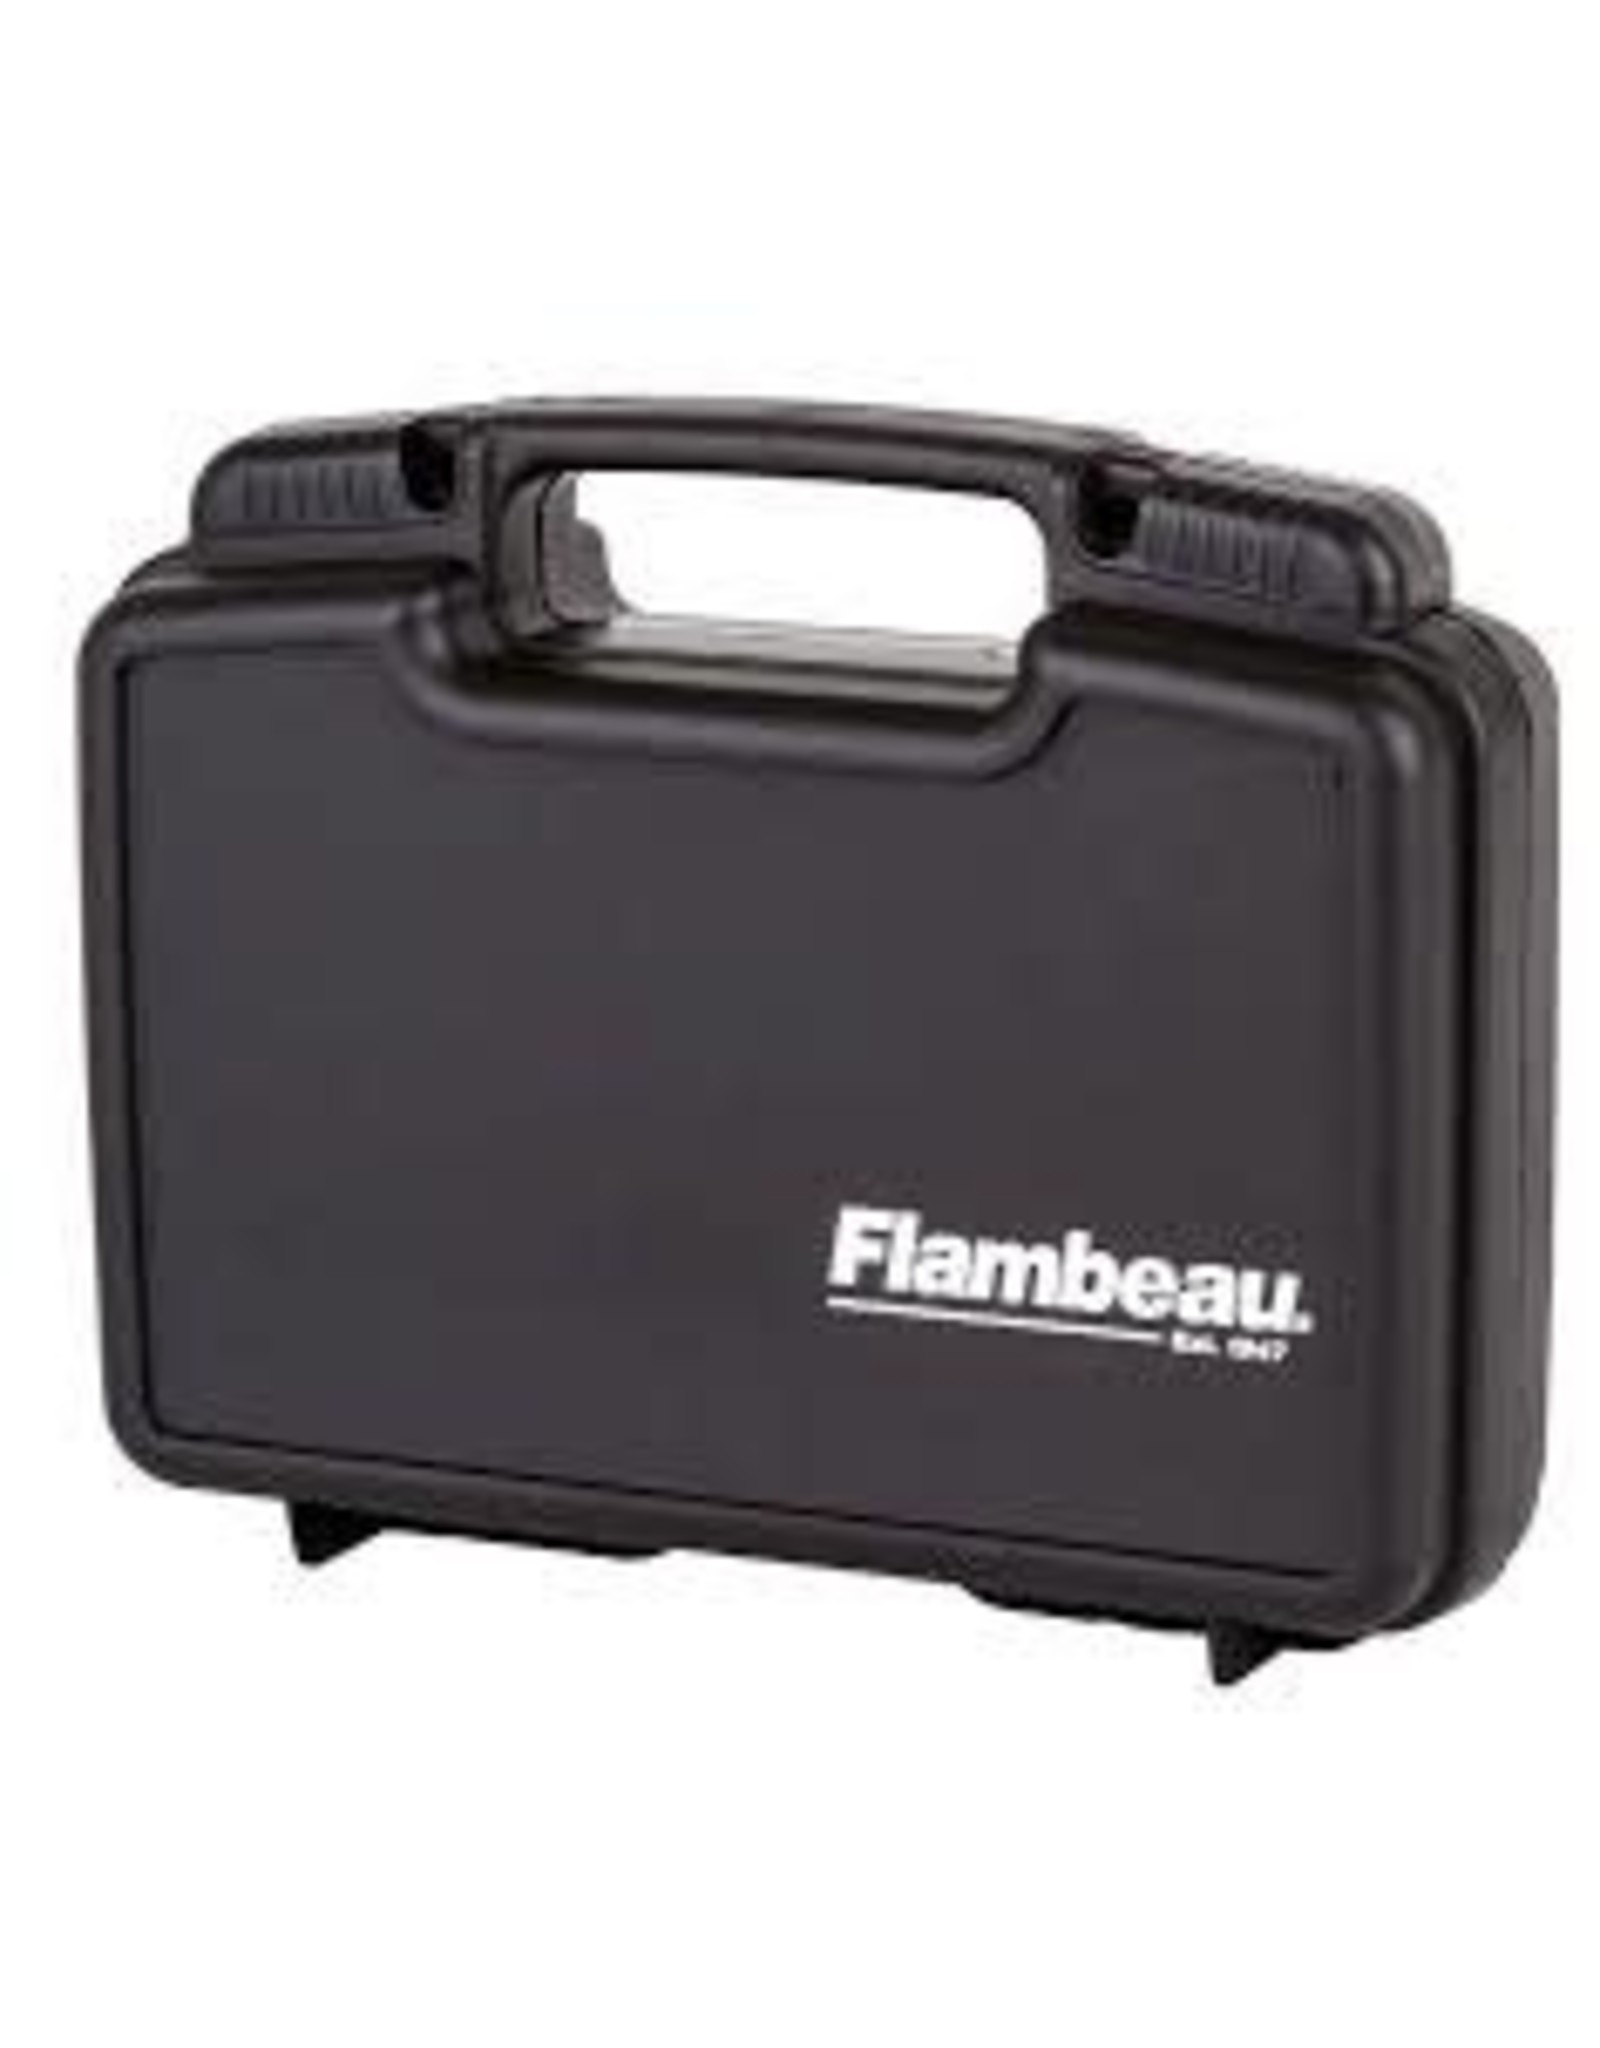 FLAMBEAU FLAM 10.5" PISTOL CASE BLACK PLASTIC